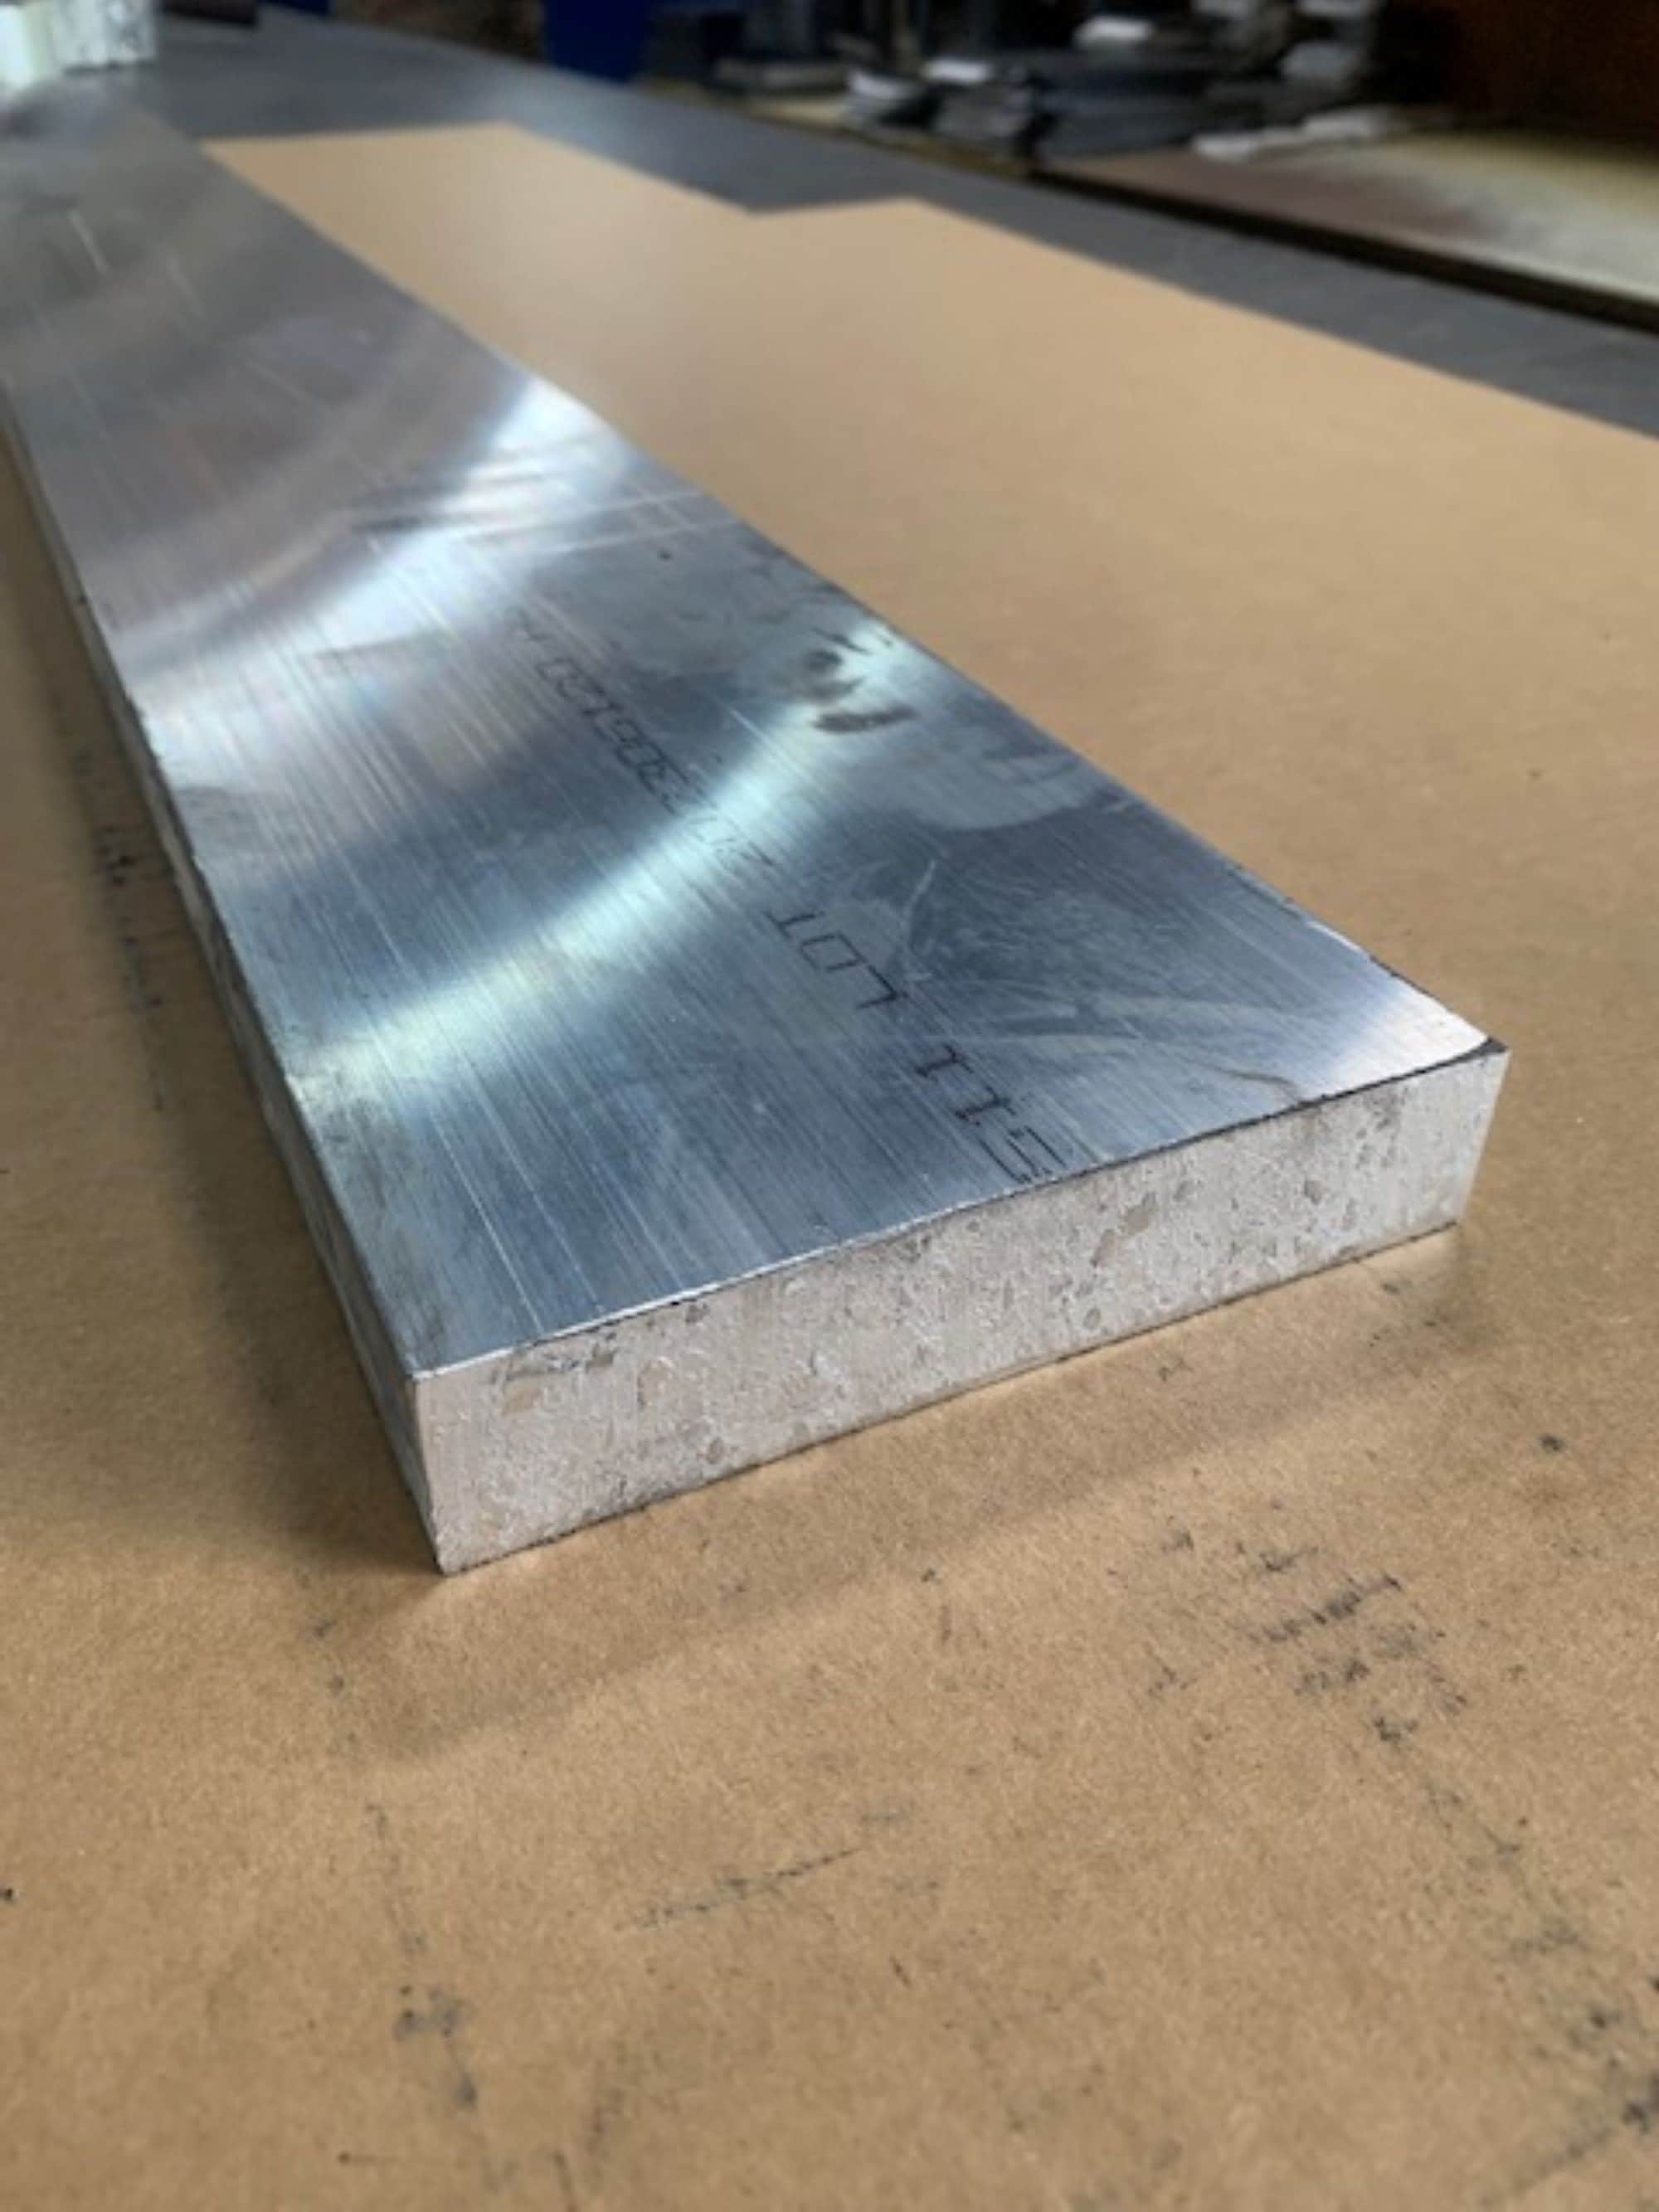 Bullseye Metals 3/8 .375 Steel Plate 10 x 12 x 3/8 Flat Bar Mild Steel  Free Shipping!